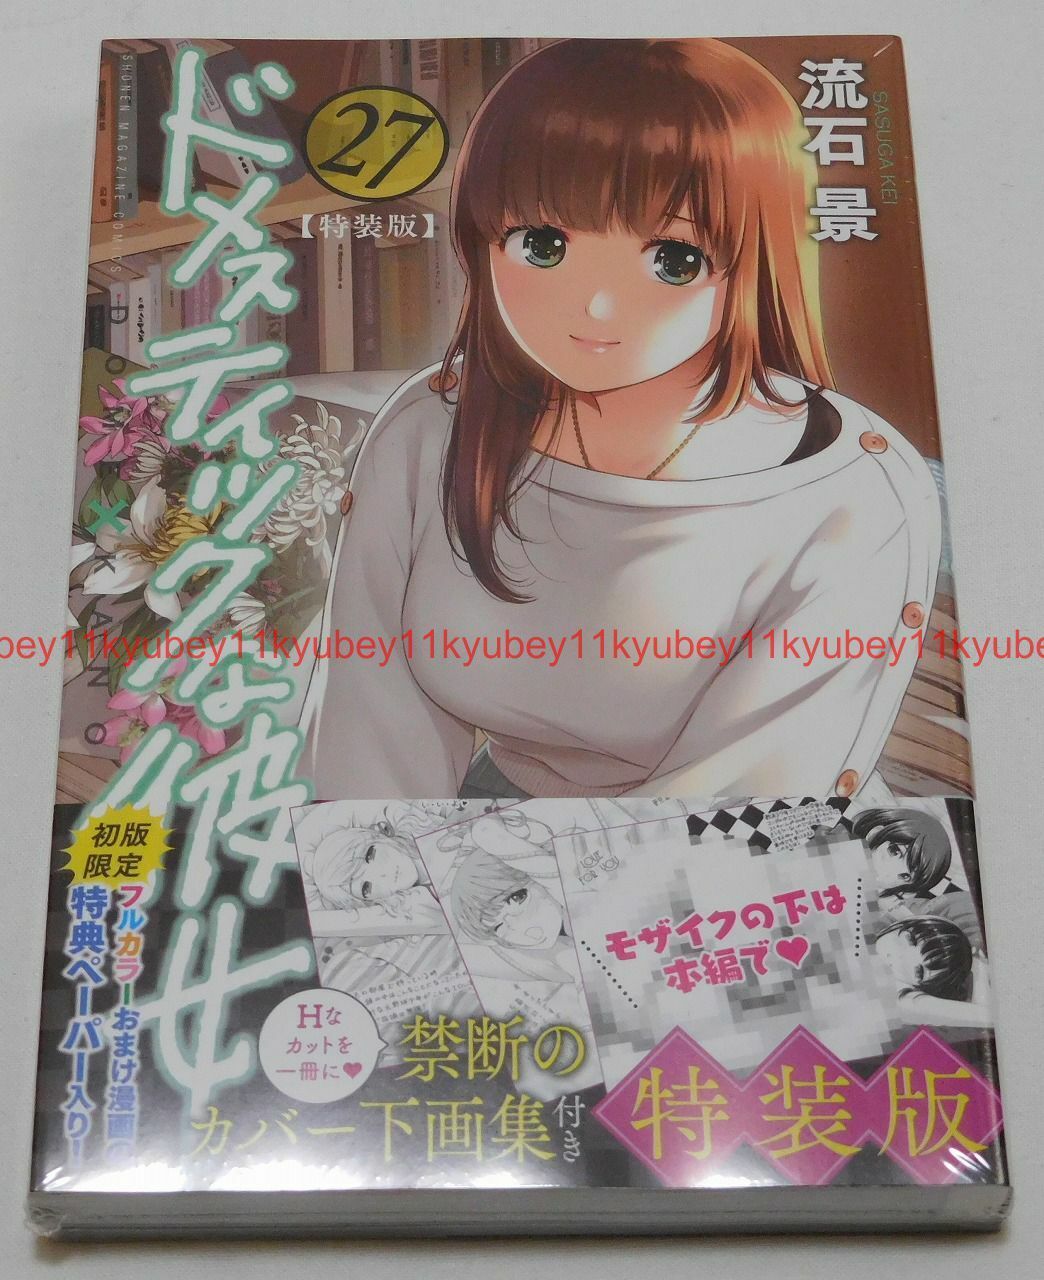 New Domestic Girlfriend na Kanojo Vol.27 Limited Edition Manga+Artbook Japan